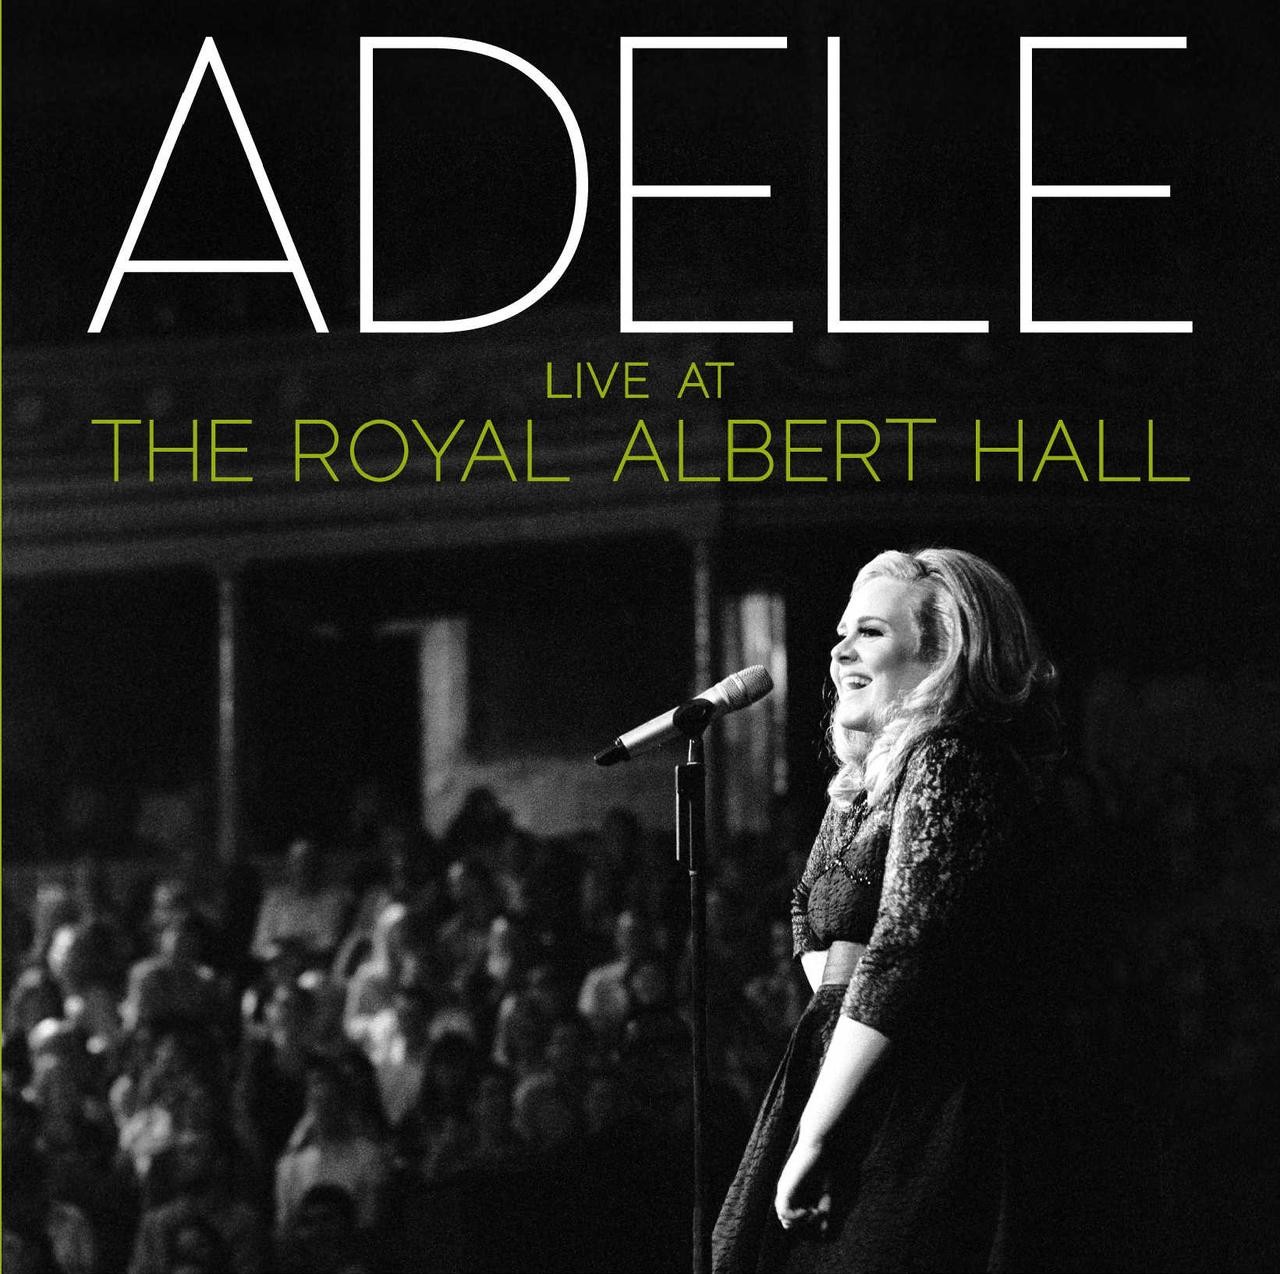 http://2.bp.blogspot.com/-xMKBK1l8QnM/UORxMDMo1FI/AAAAAAAAAx4/DLULez7mmjw/s1600/Adele+-+Live+at+The+Royal+Albert+Hall+(2011).jpg